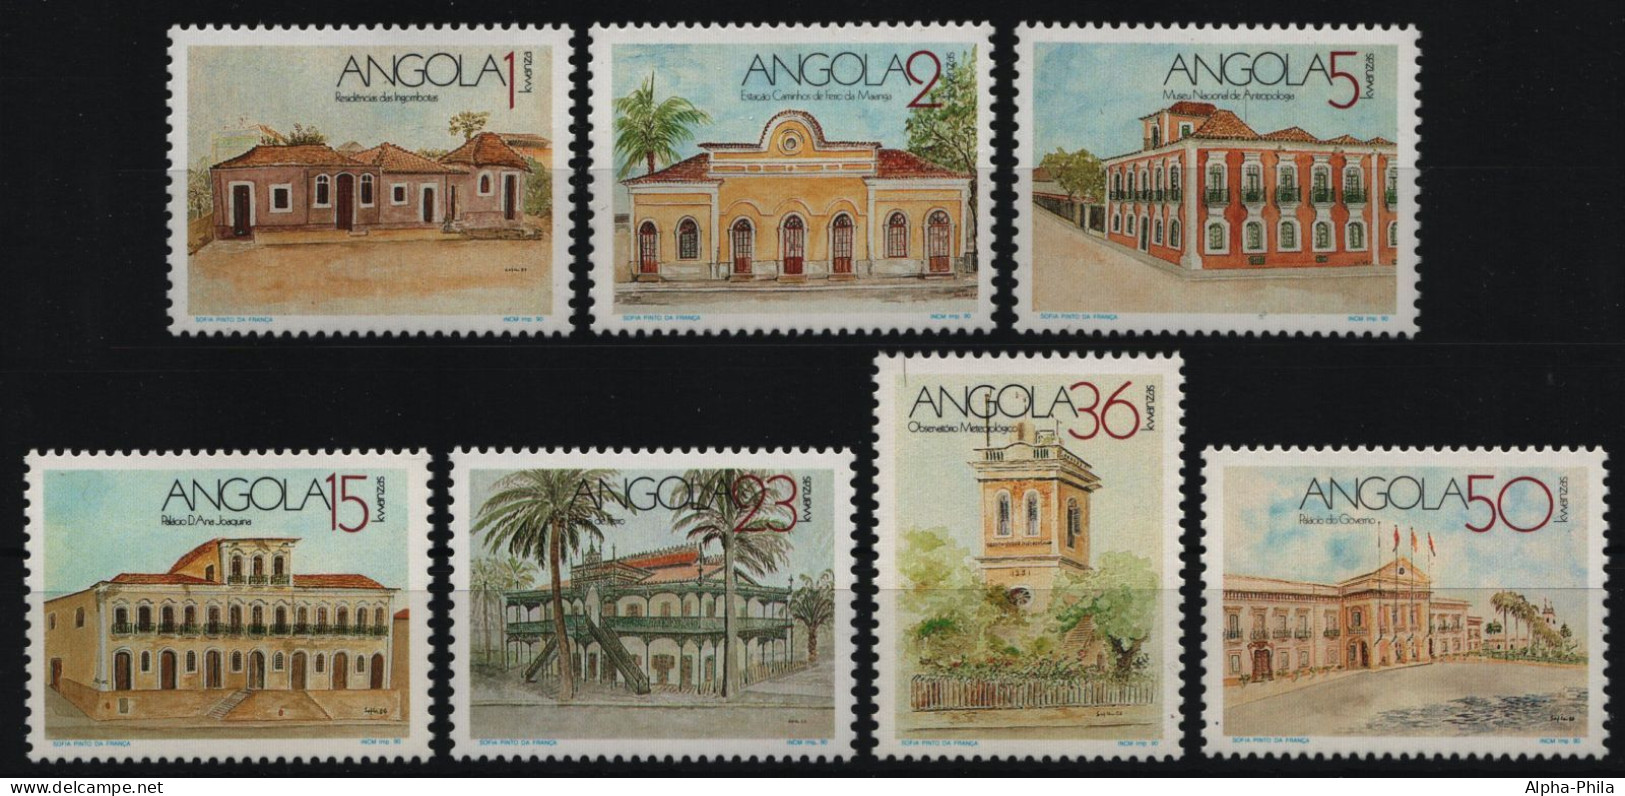 Angola 1990 - Mi-Nr. 781-787 ** - MNH - Historische Gebäude - Angola